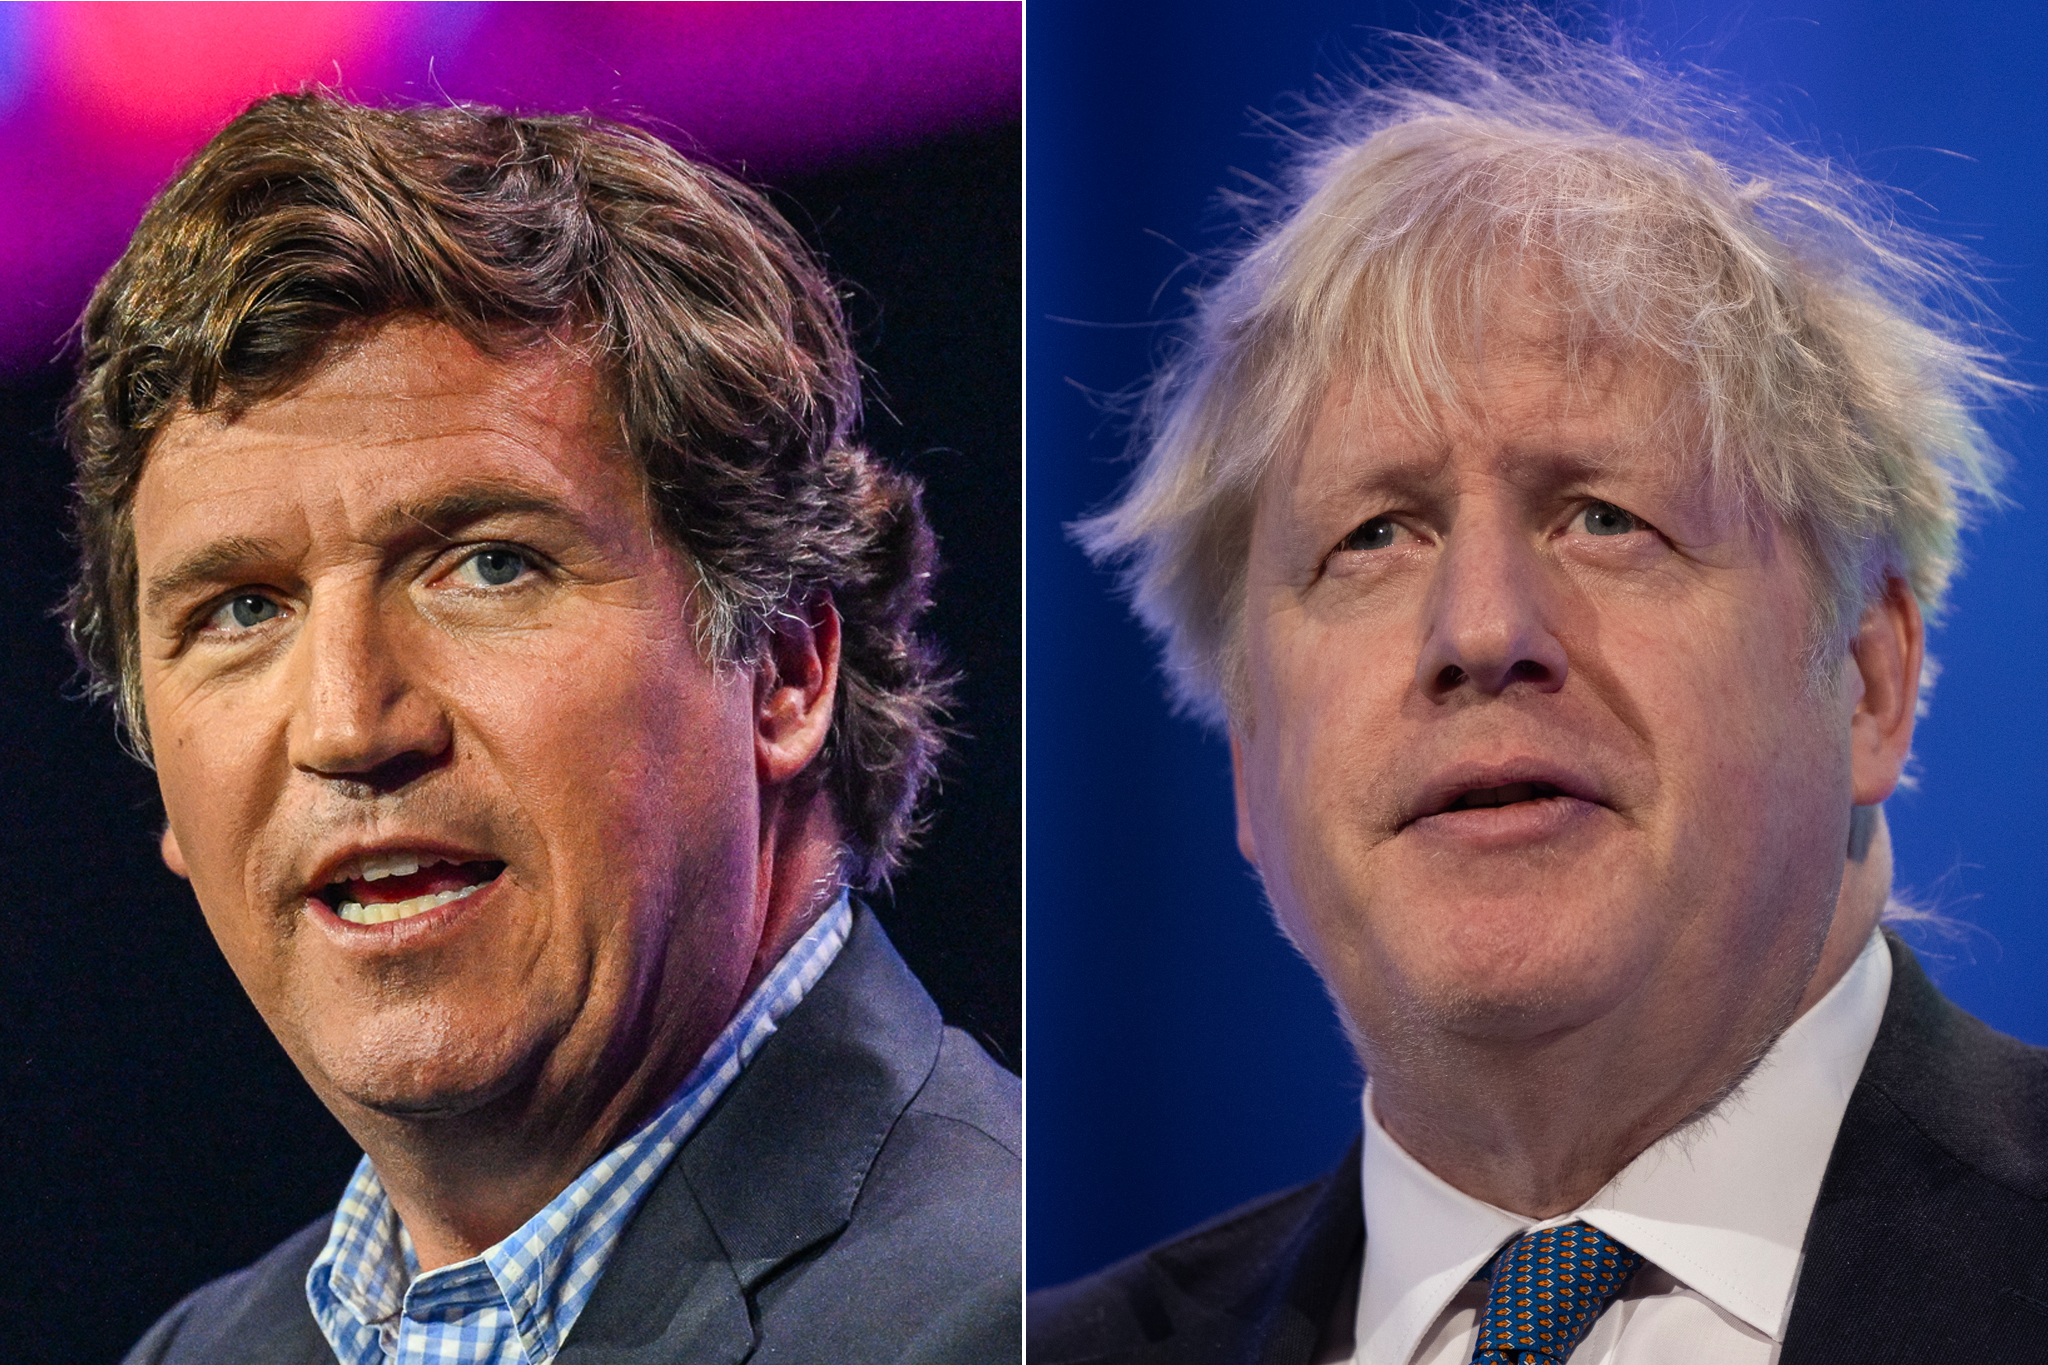 Mr Carlson also mocked Mr Johnson, joking that ‘his name’s not actually Boris’